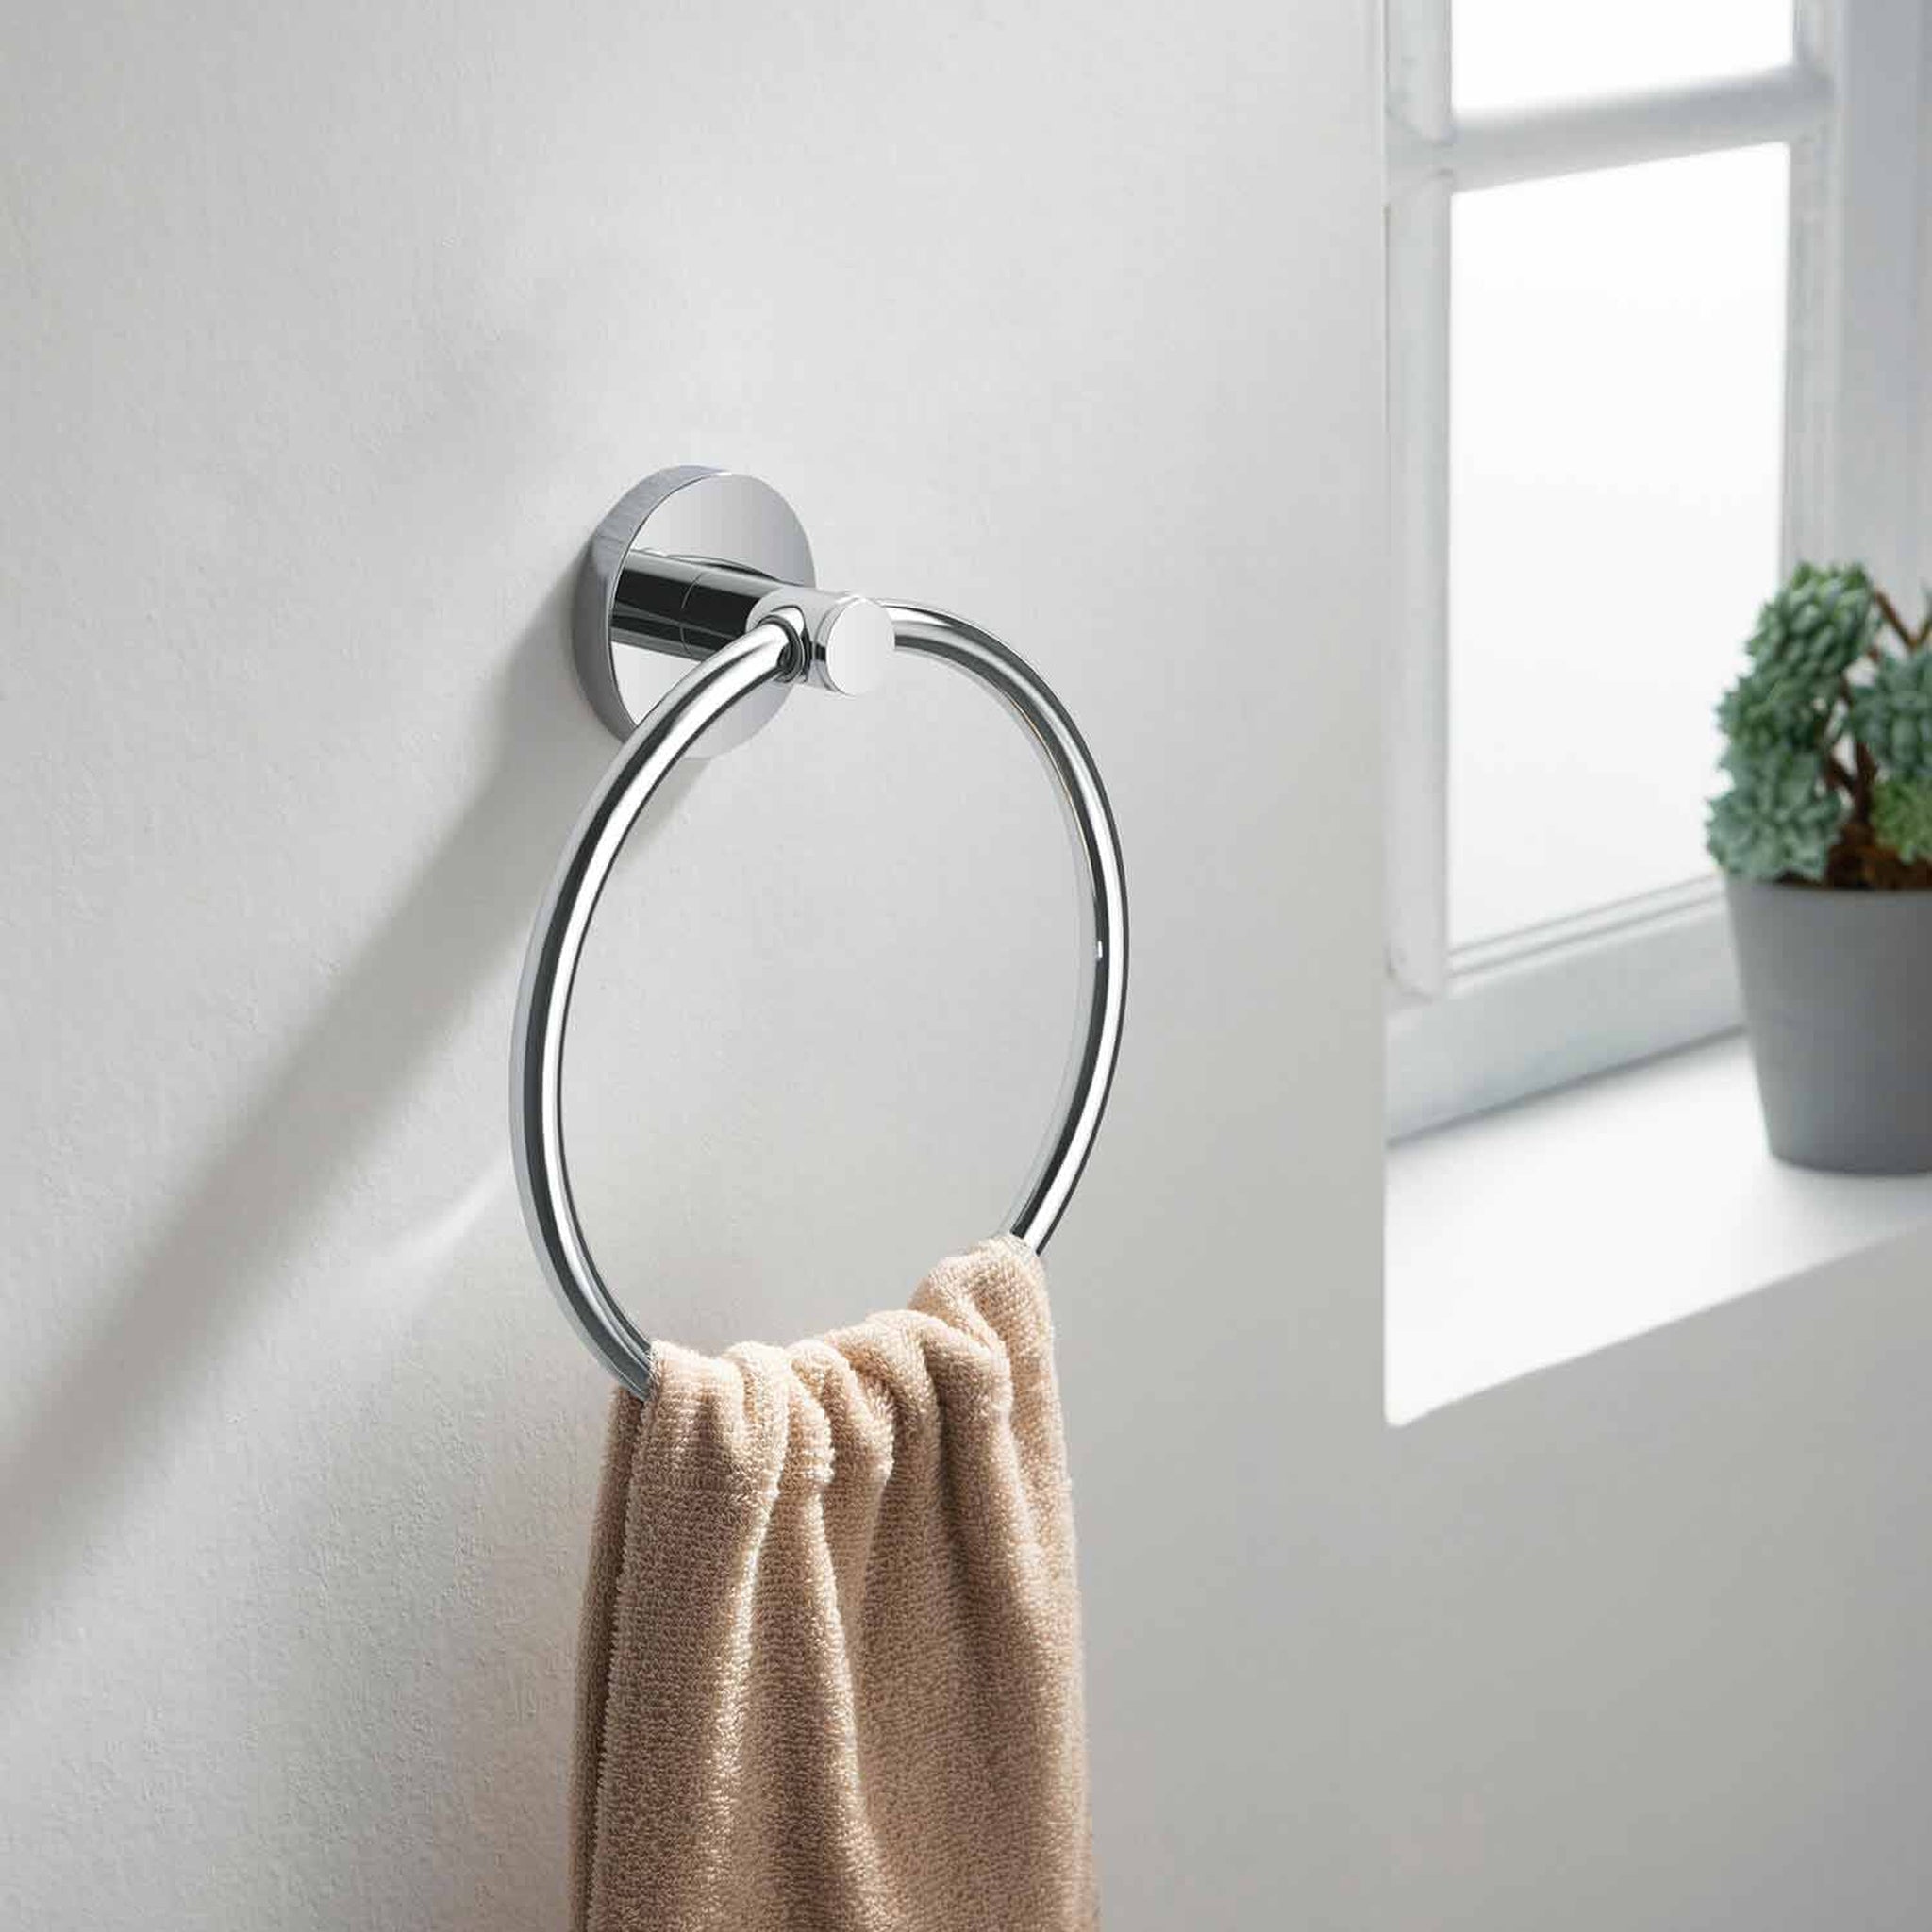 KIBI, KIBI Circular Brass Bathroom Towel Ring in Chrome Finish